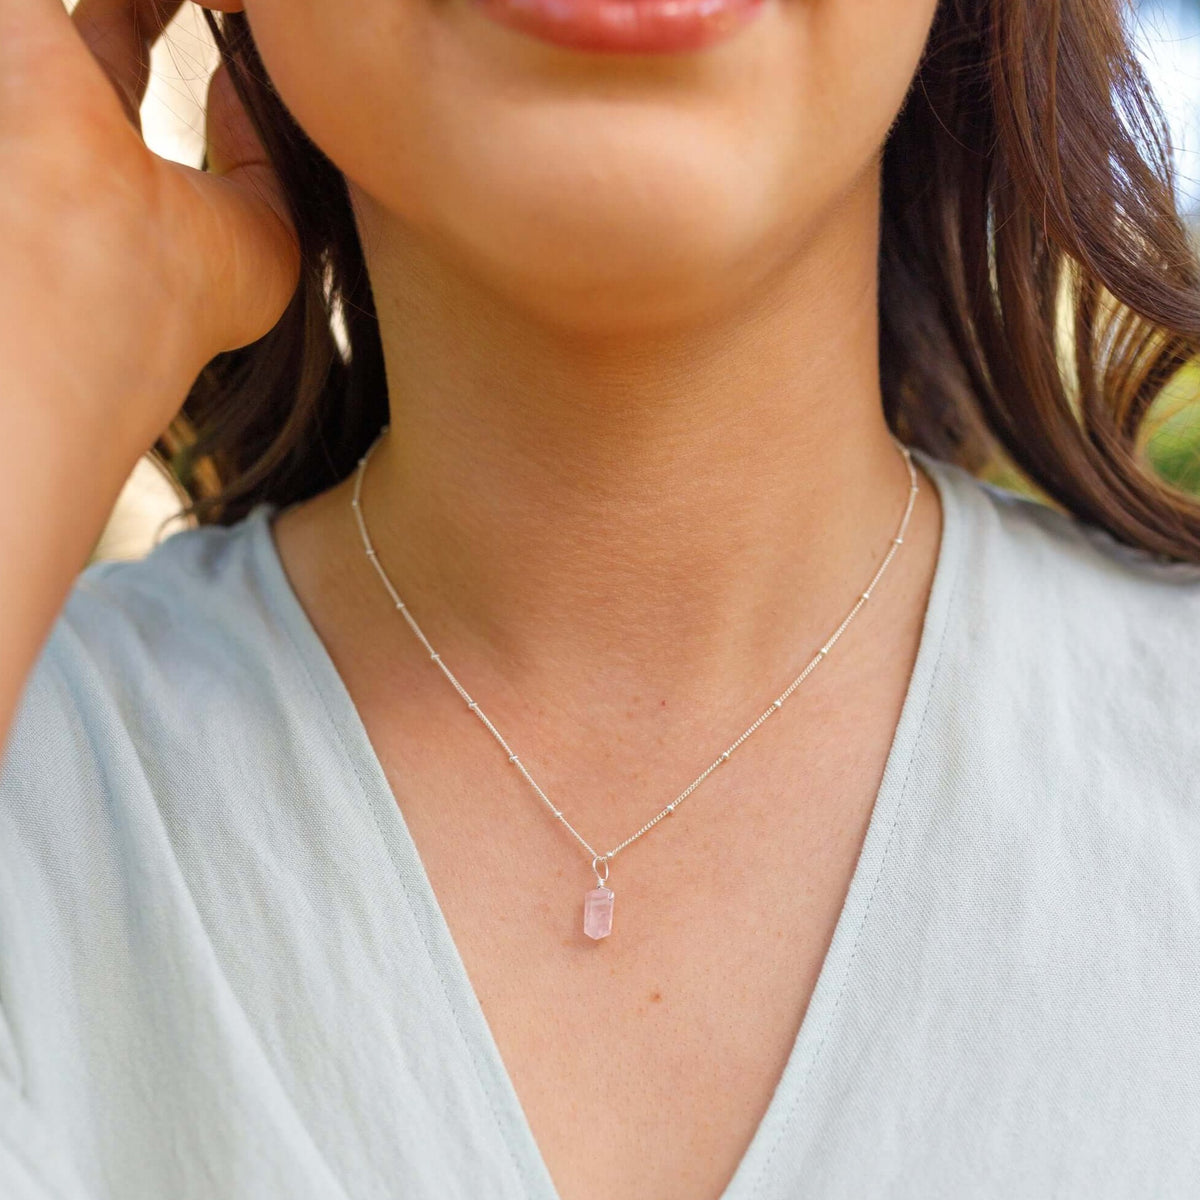 Double Terminated Crystal Pendant Necklace - Rose Quartz - Sterling Silver Satellite - Luna Tide Handmade Jewellery